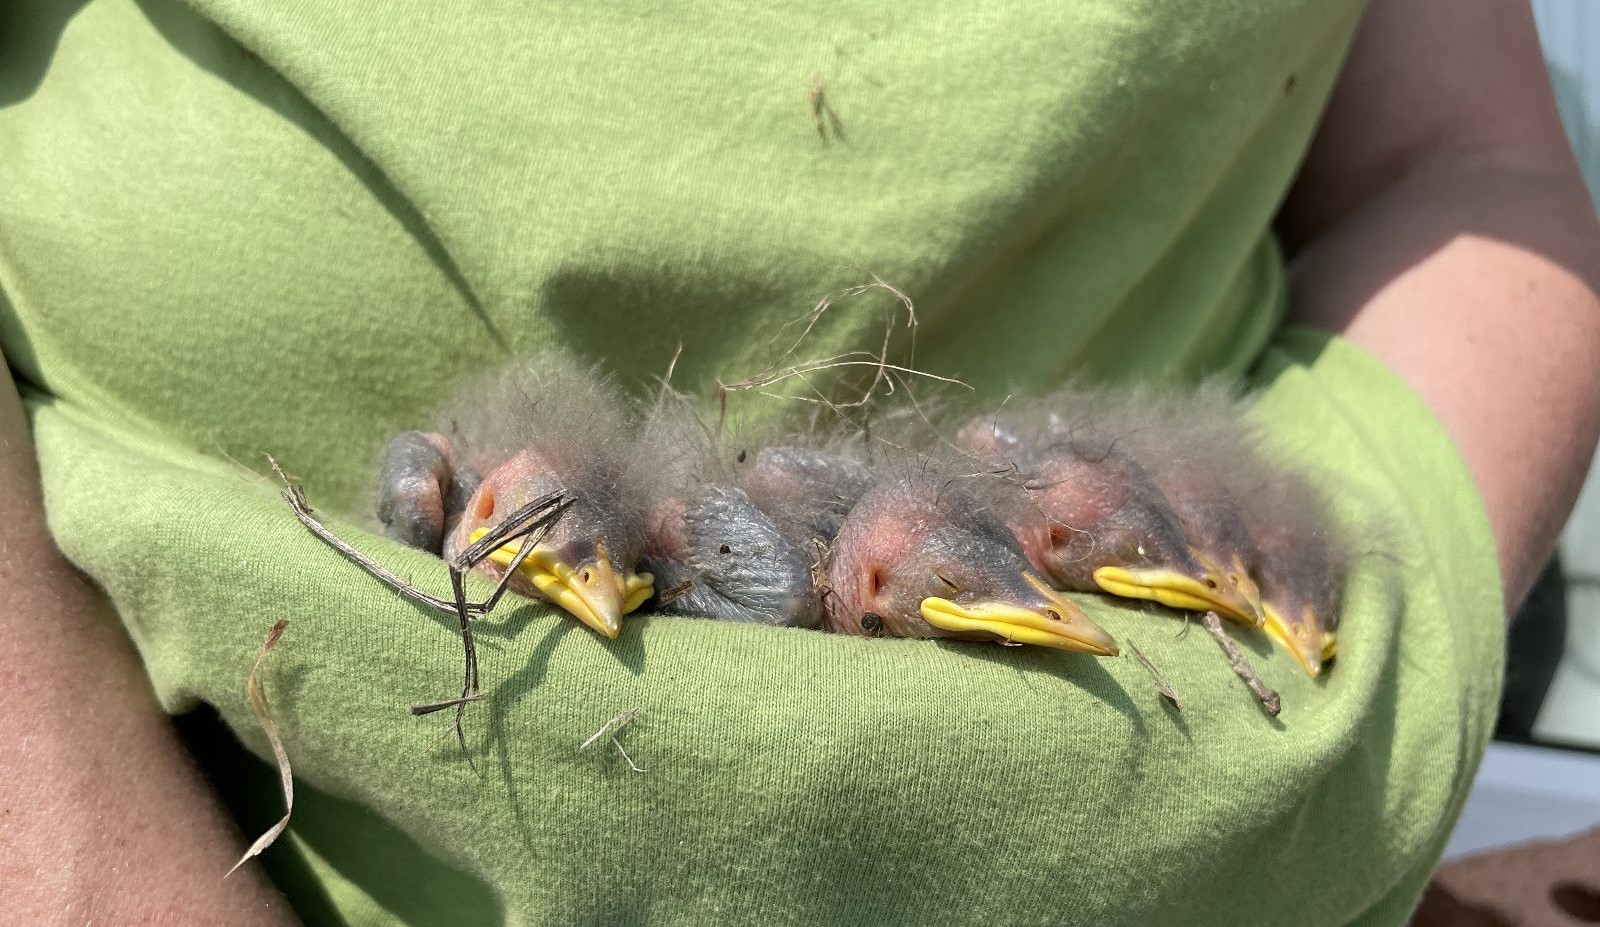 Ottawa skedaddle humane wildlife control starling babies bird removal May 2023 2